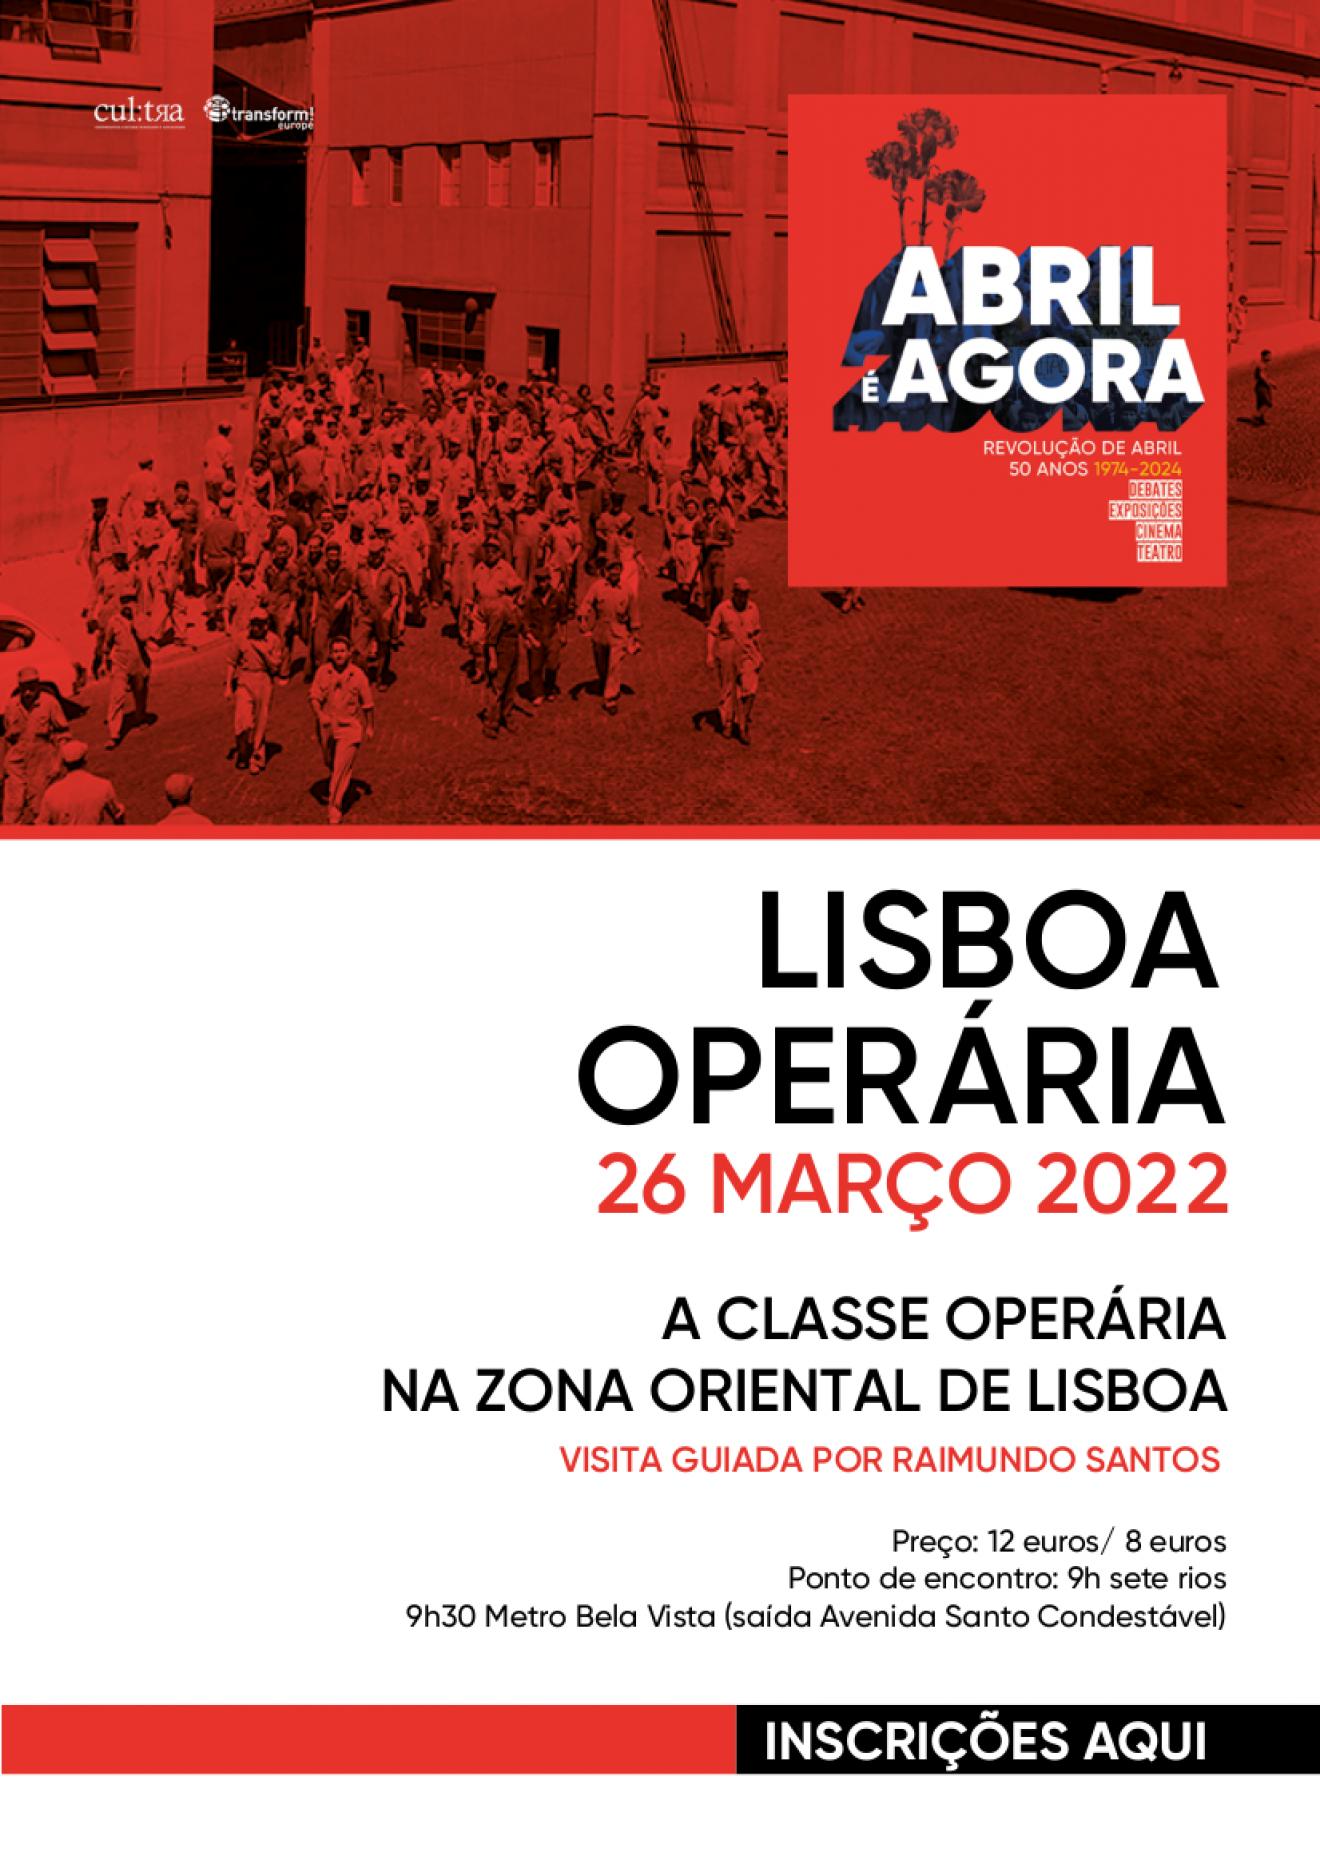 Lisboa Operária: A classe operária na zona Oriental de Lisboa